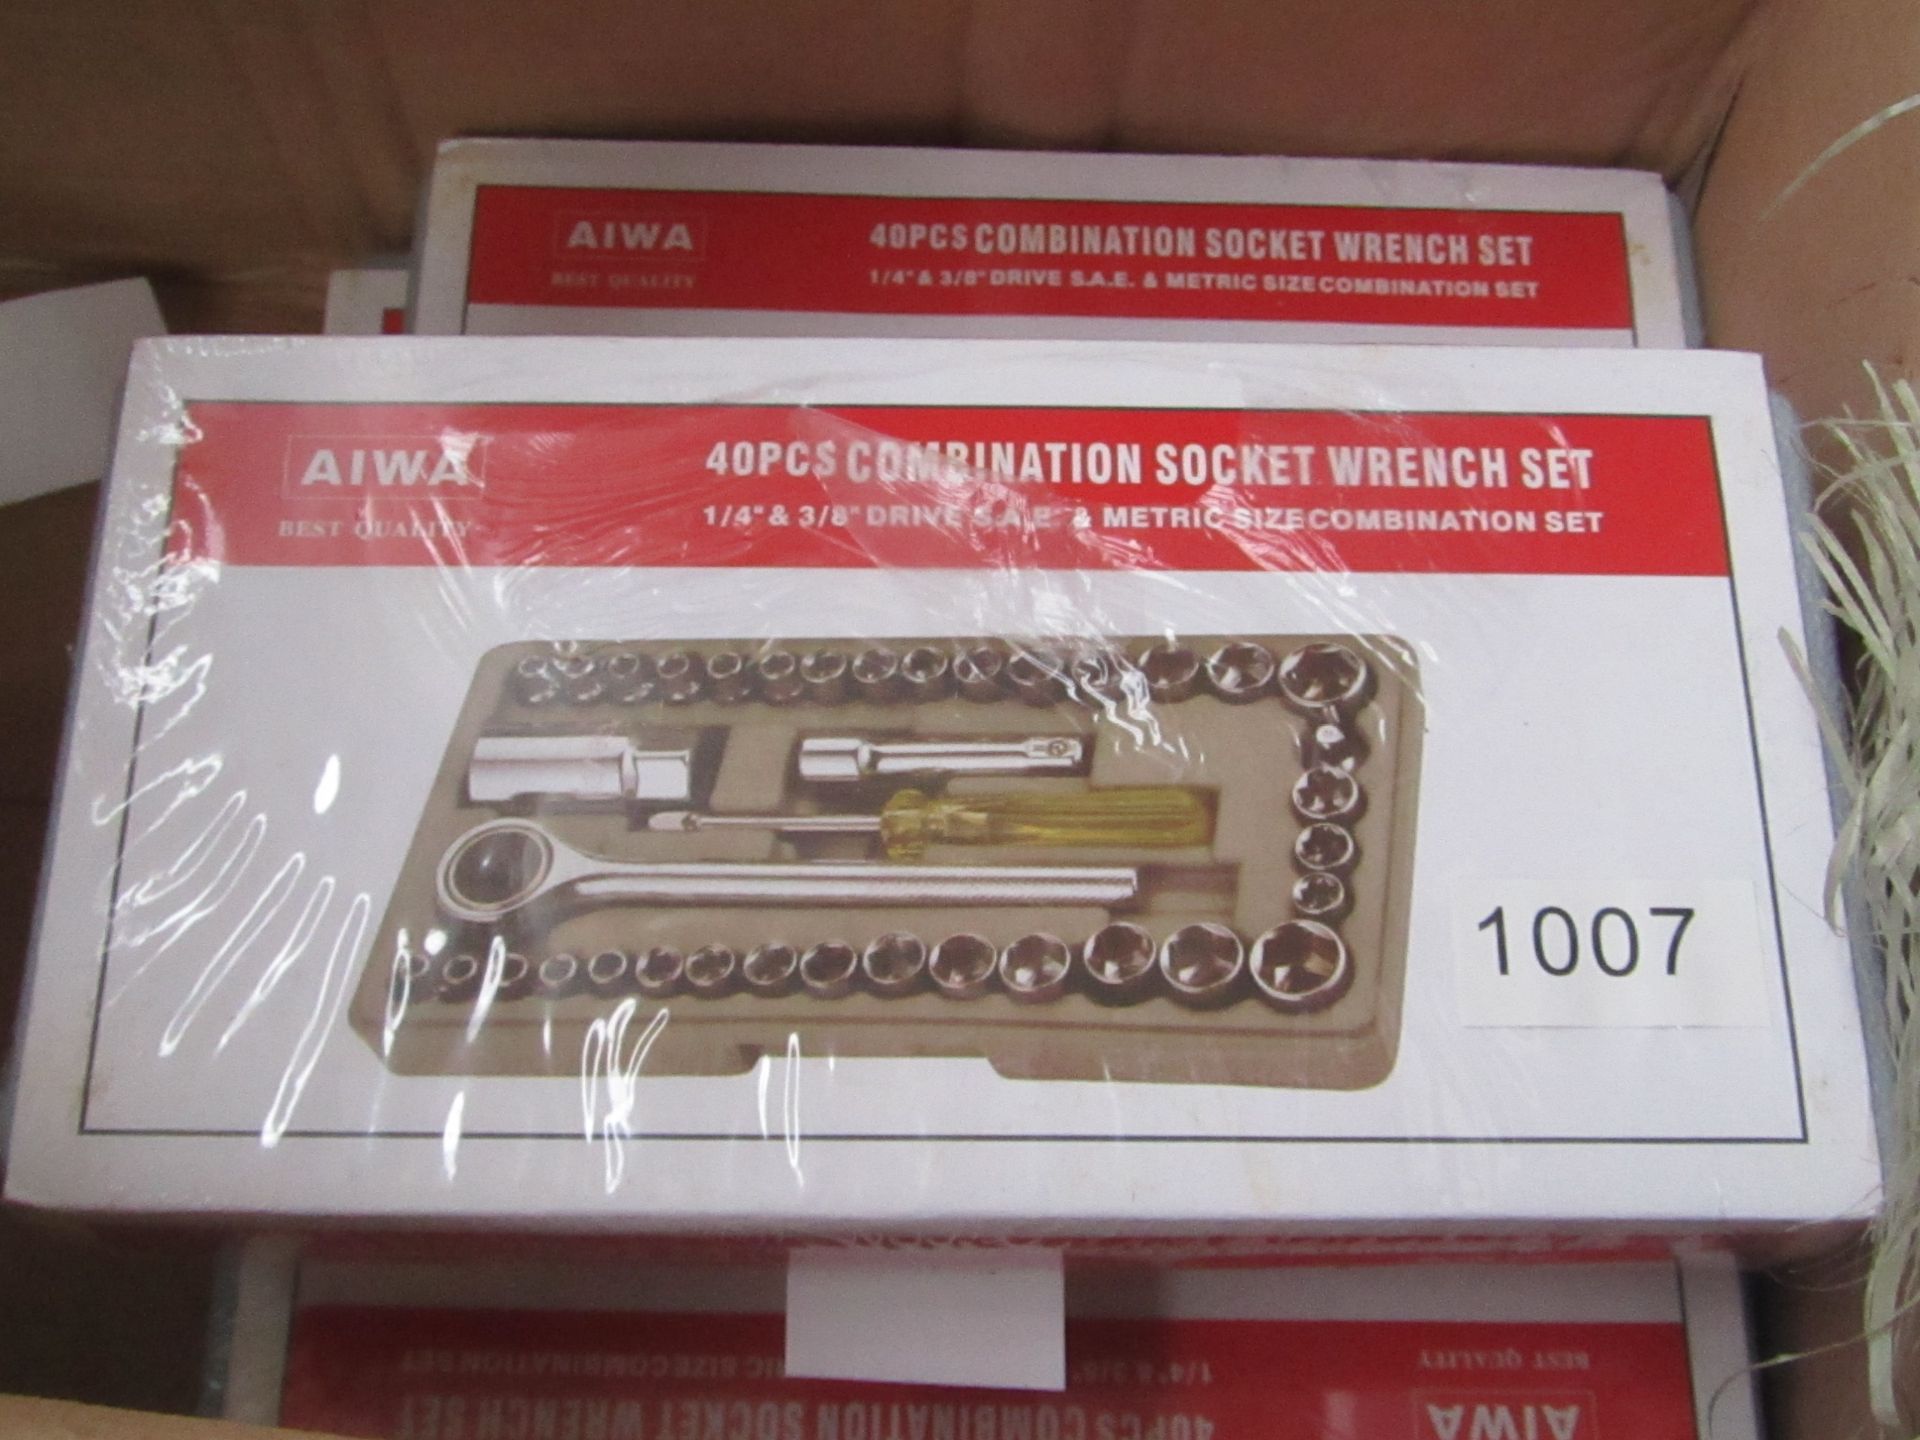 Aiwa, 40pcs combination socket wrench set, boxed and new